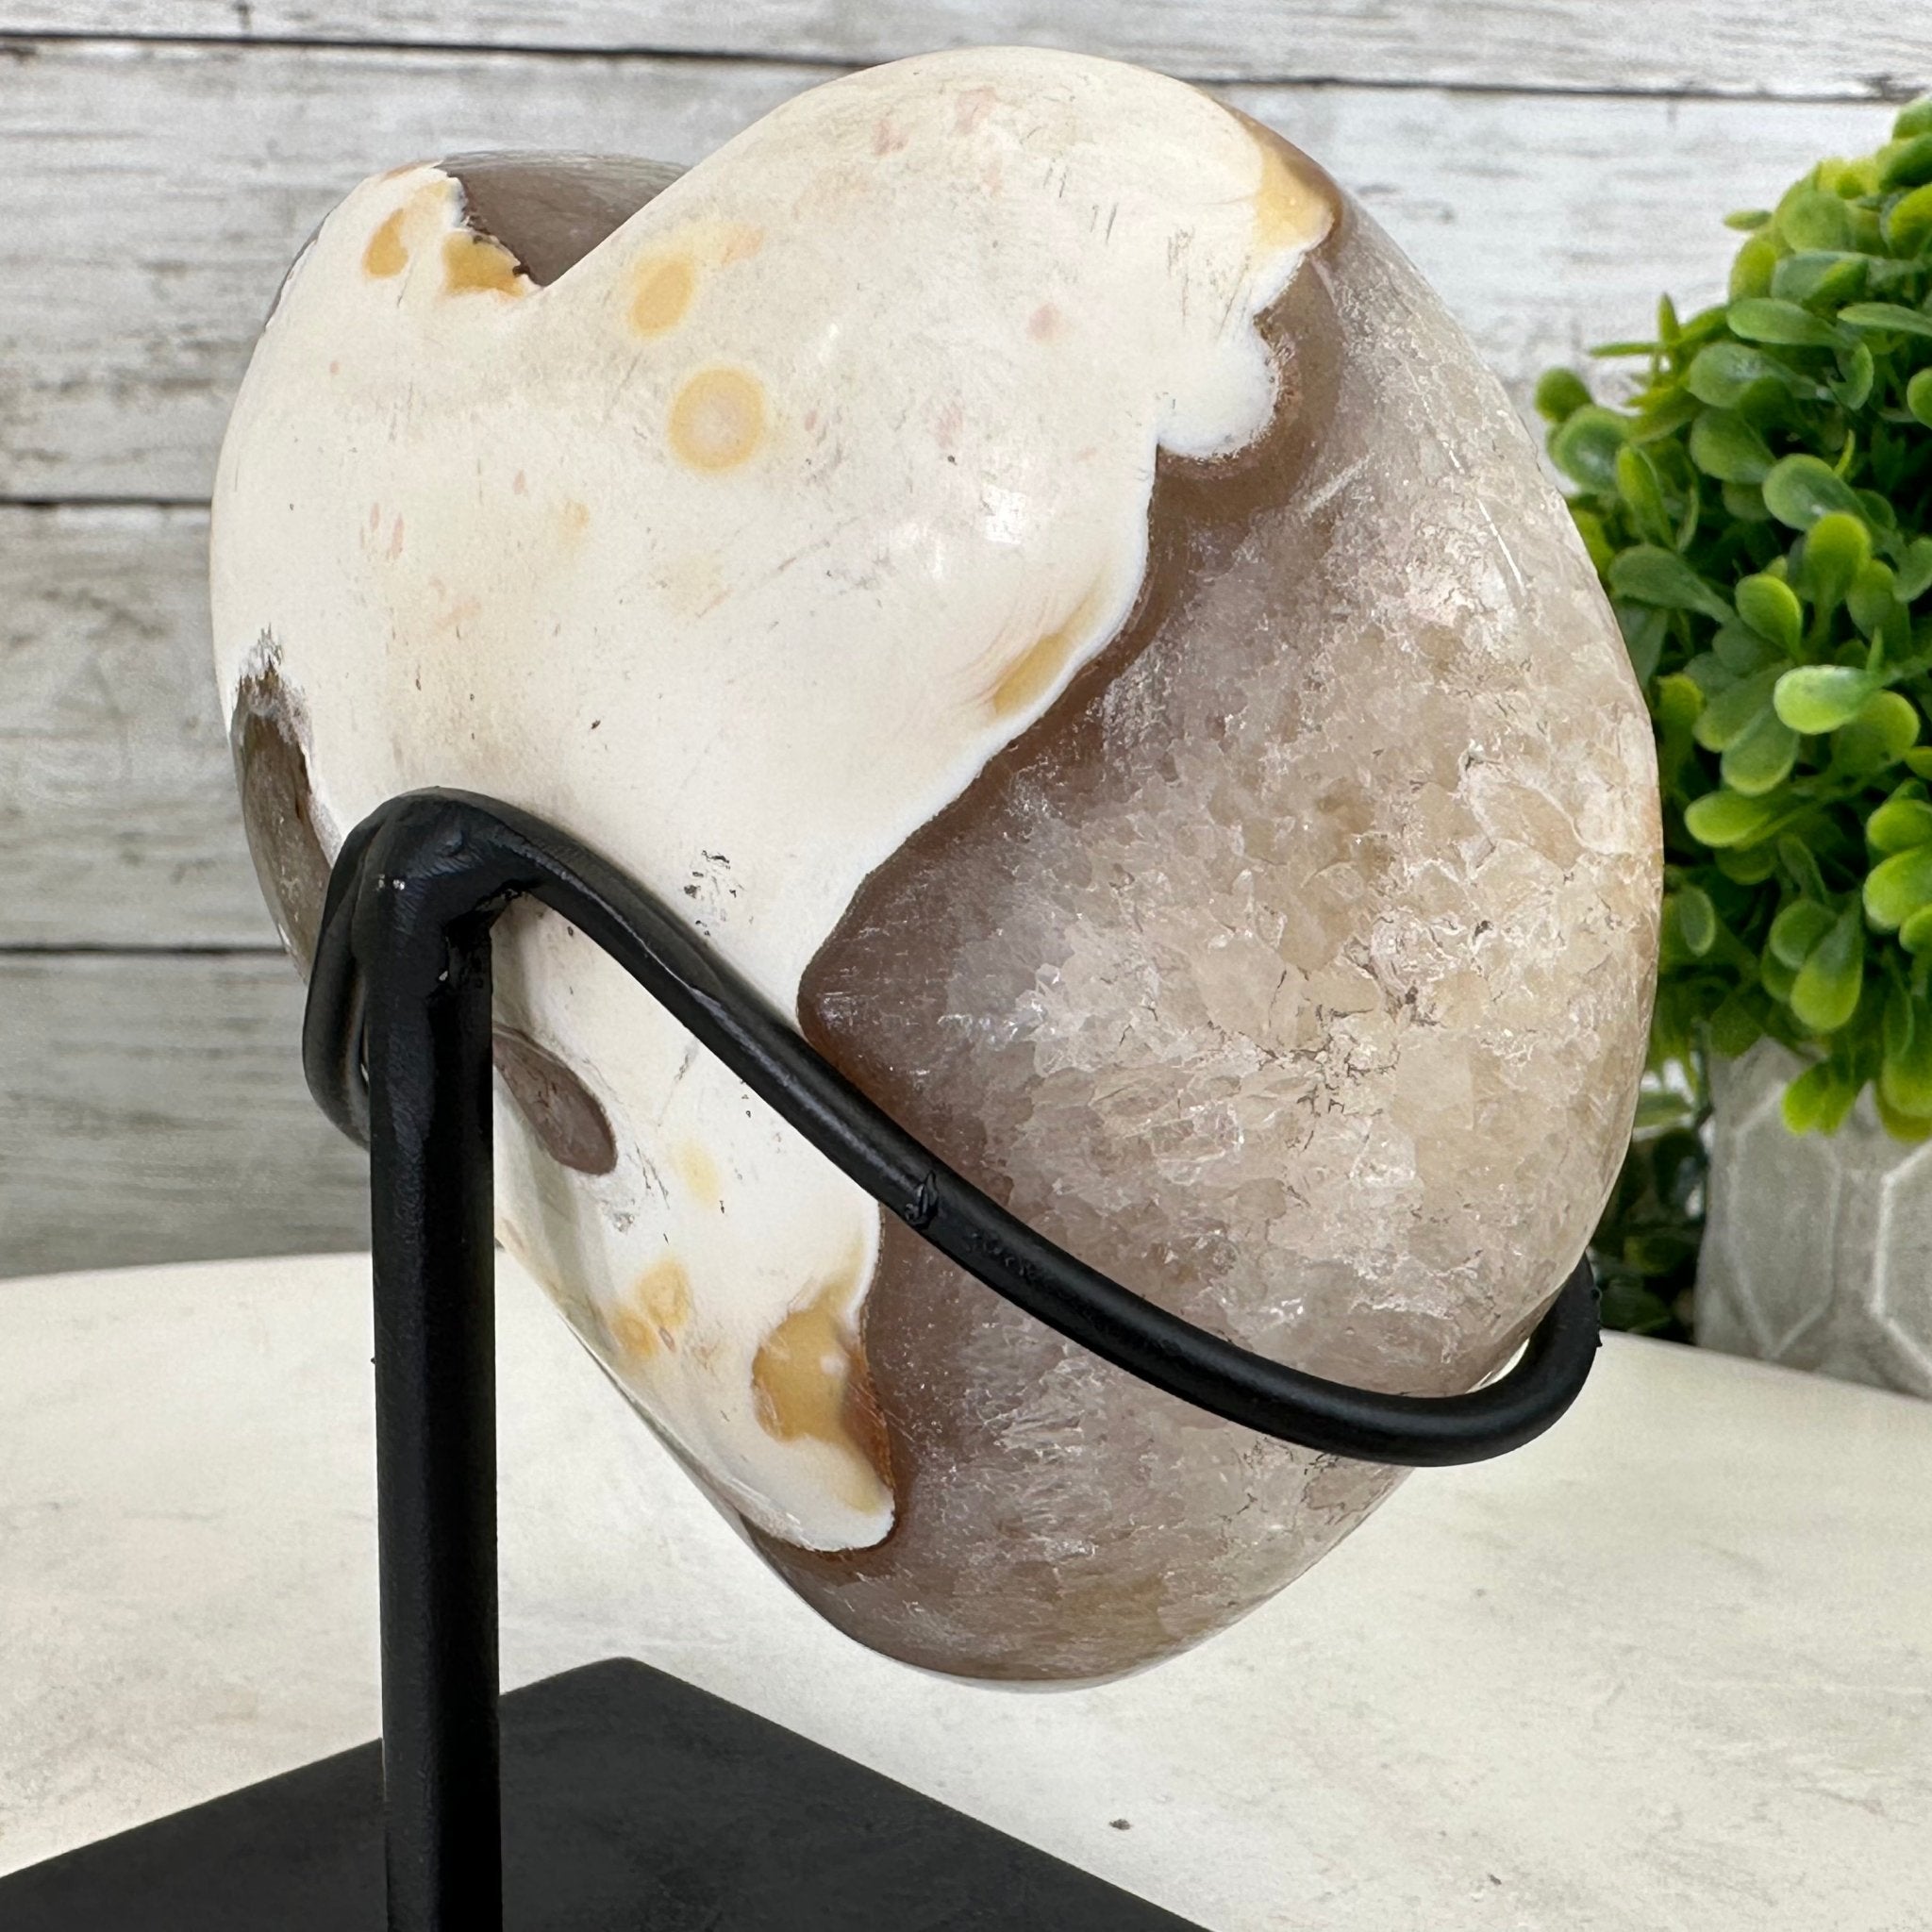 Polished Agate Heart Geode on a Metal Stand, 1.5 lbs & 4.4" Tall, Model #5468-0019 by Brazil Gems - Brazil GemsBrazil GemsPolished Agate Heart Geode on a Metal Stand, 1.5 lbs & 4.4" Tall, Model #5468-0019 by Brazil GemsHearts5468-0019